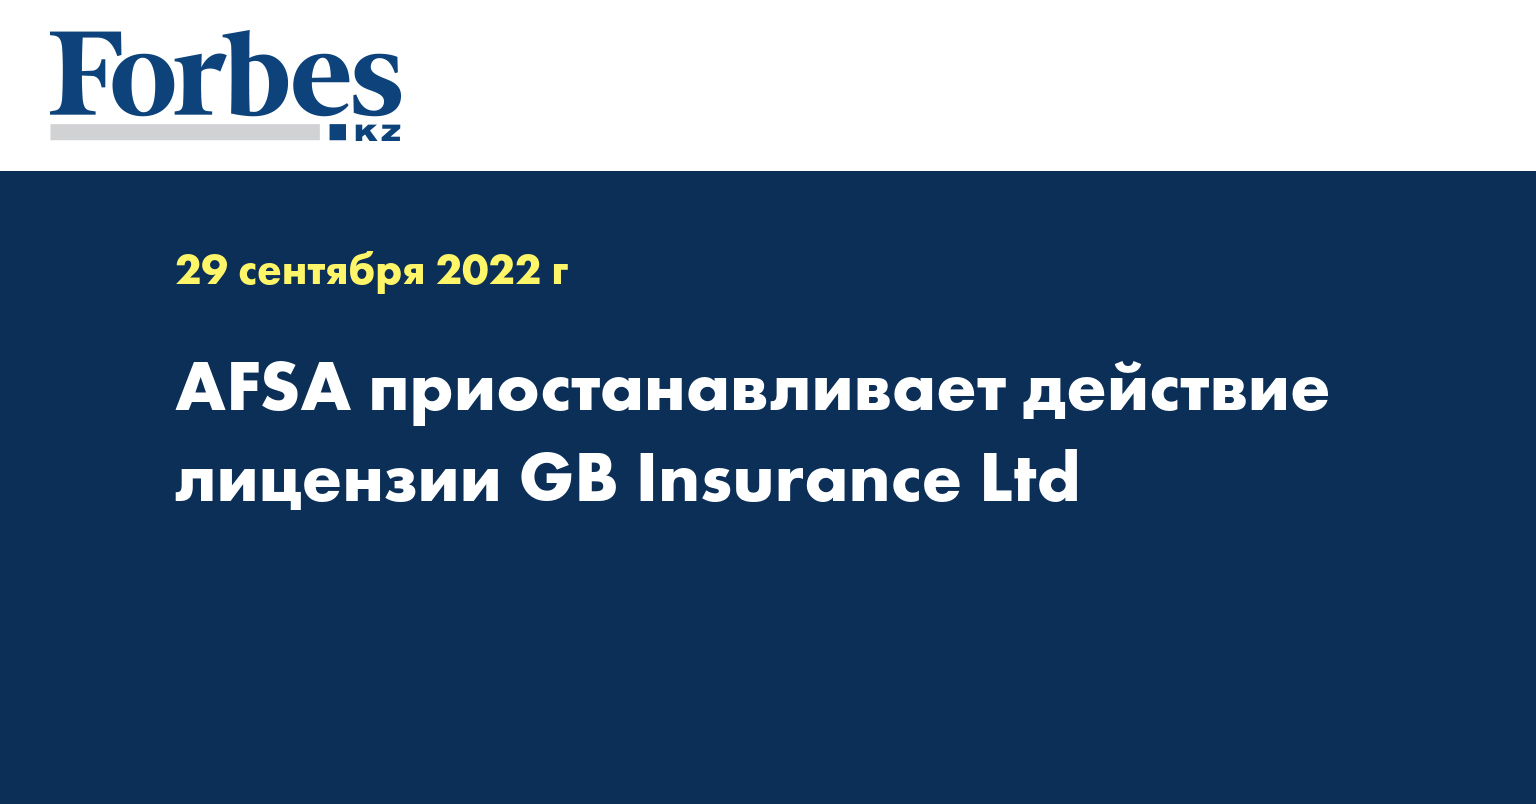 AFSA приостанавливает действие лицензии GB Insurance Ltd